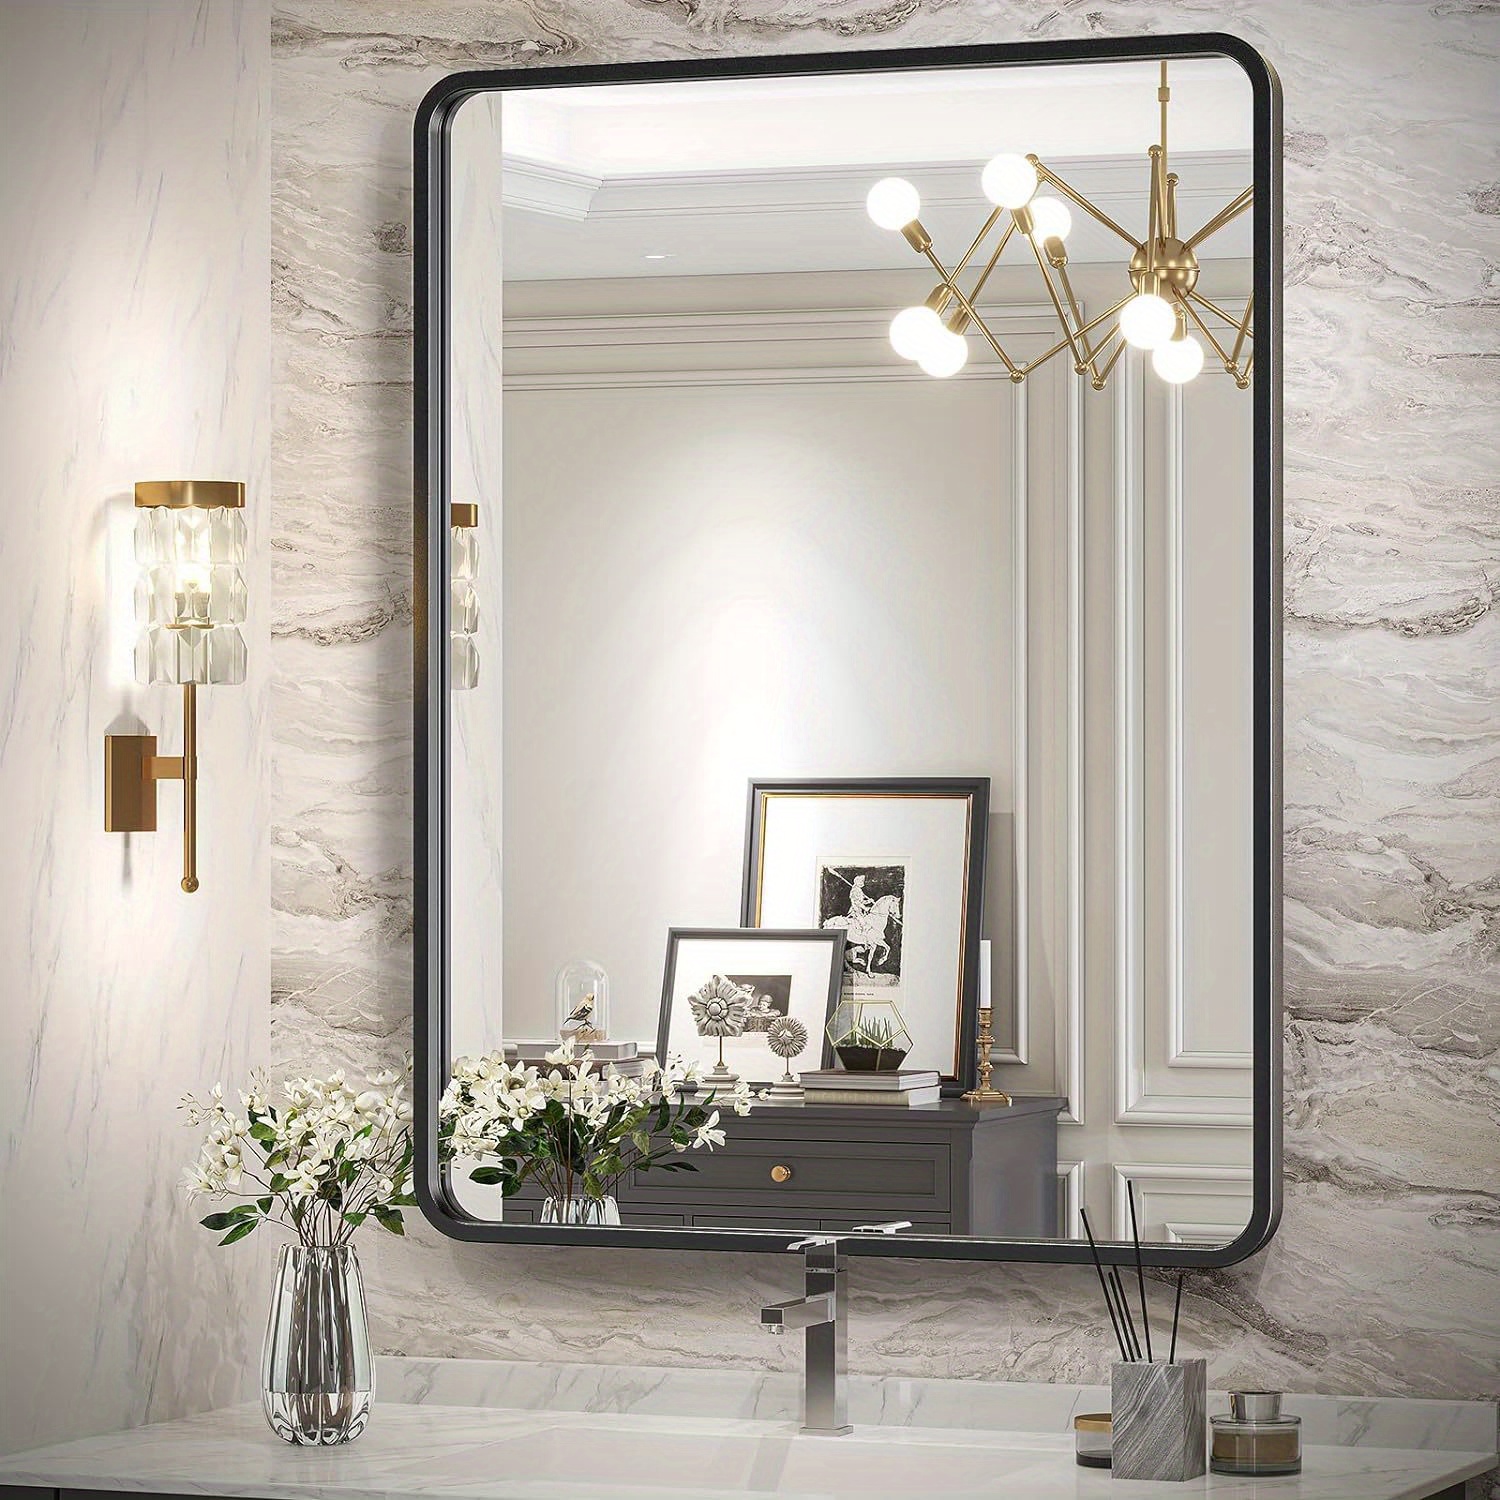 

Bathroom Mirror For Wall, Metal Framed Rectangle Mirror, Wall Mounted Vanity Mirror For Bathroom, Hangs Horizontal Or Vertical